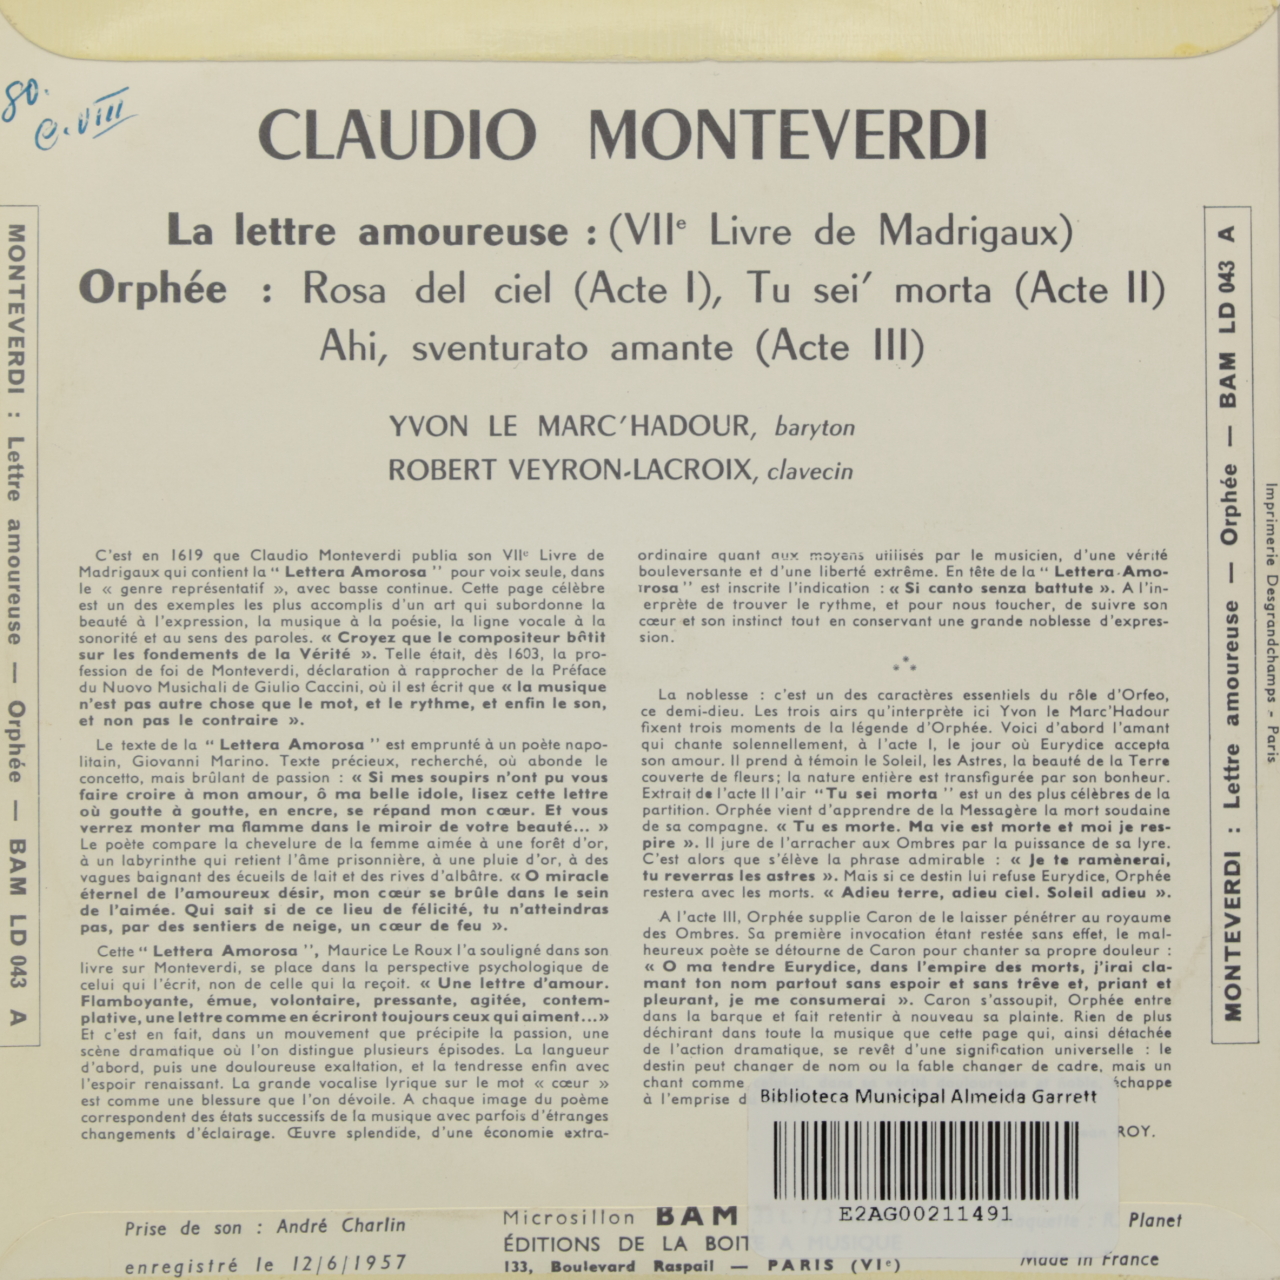 Monteverdi: Letttera amorosa; Orfeo (extraits)